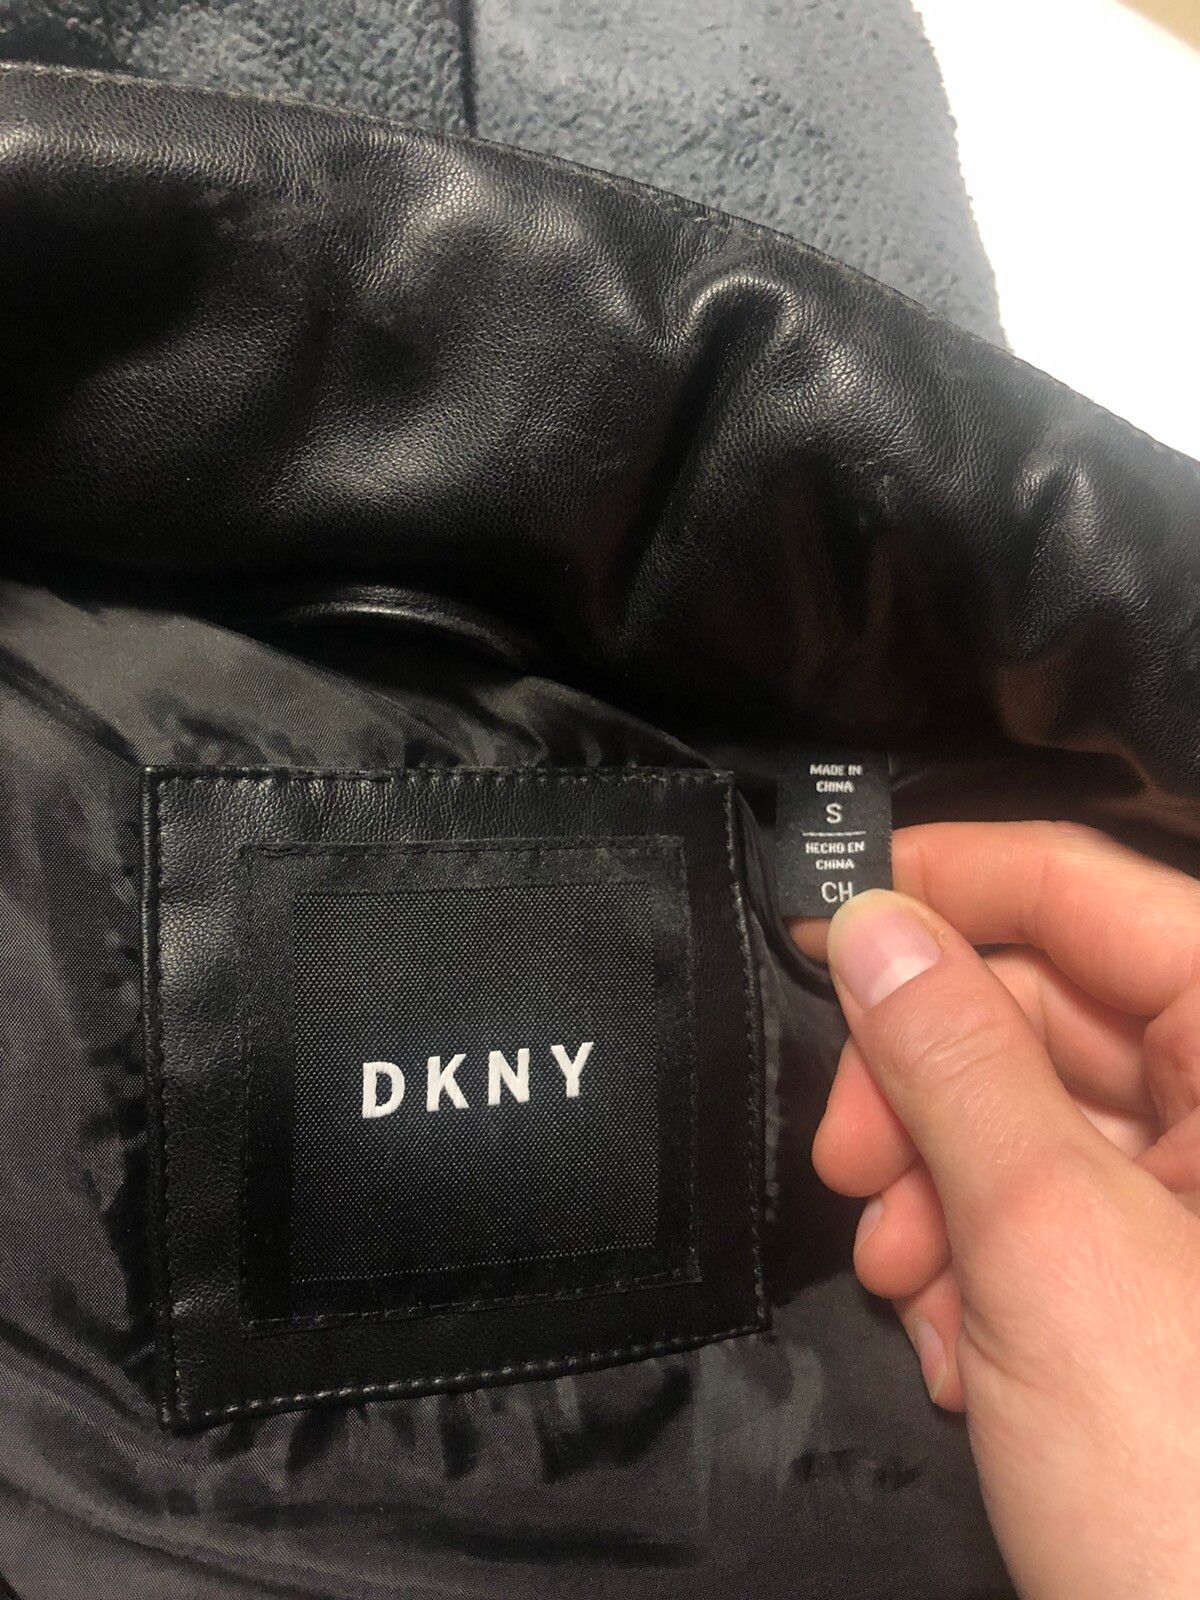 DKNY BKNY Black puffer jacket Size US S / EU 44-46 / 1 - 3 Preview